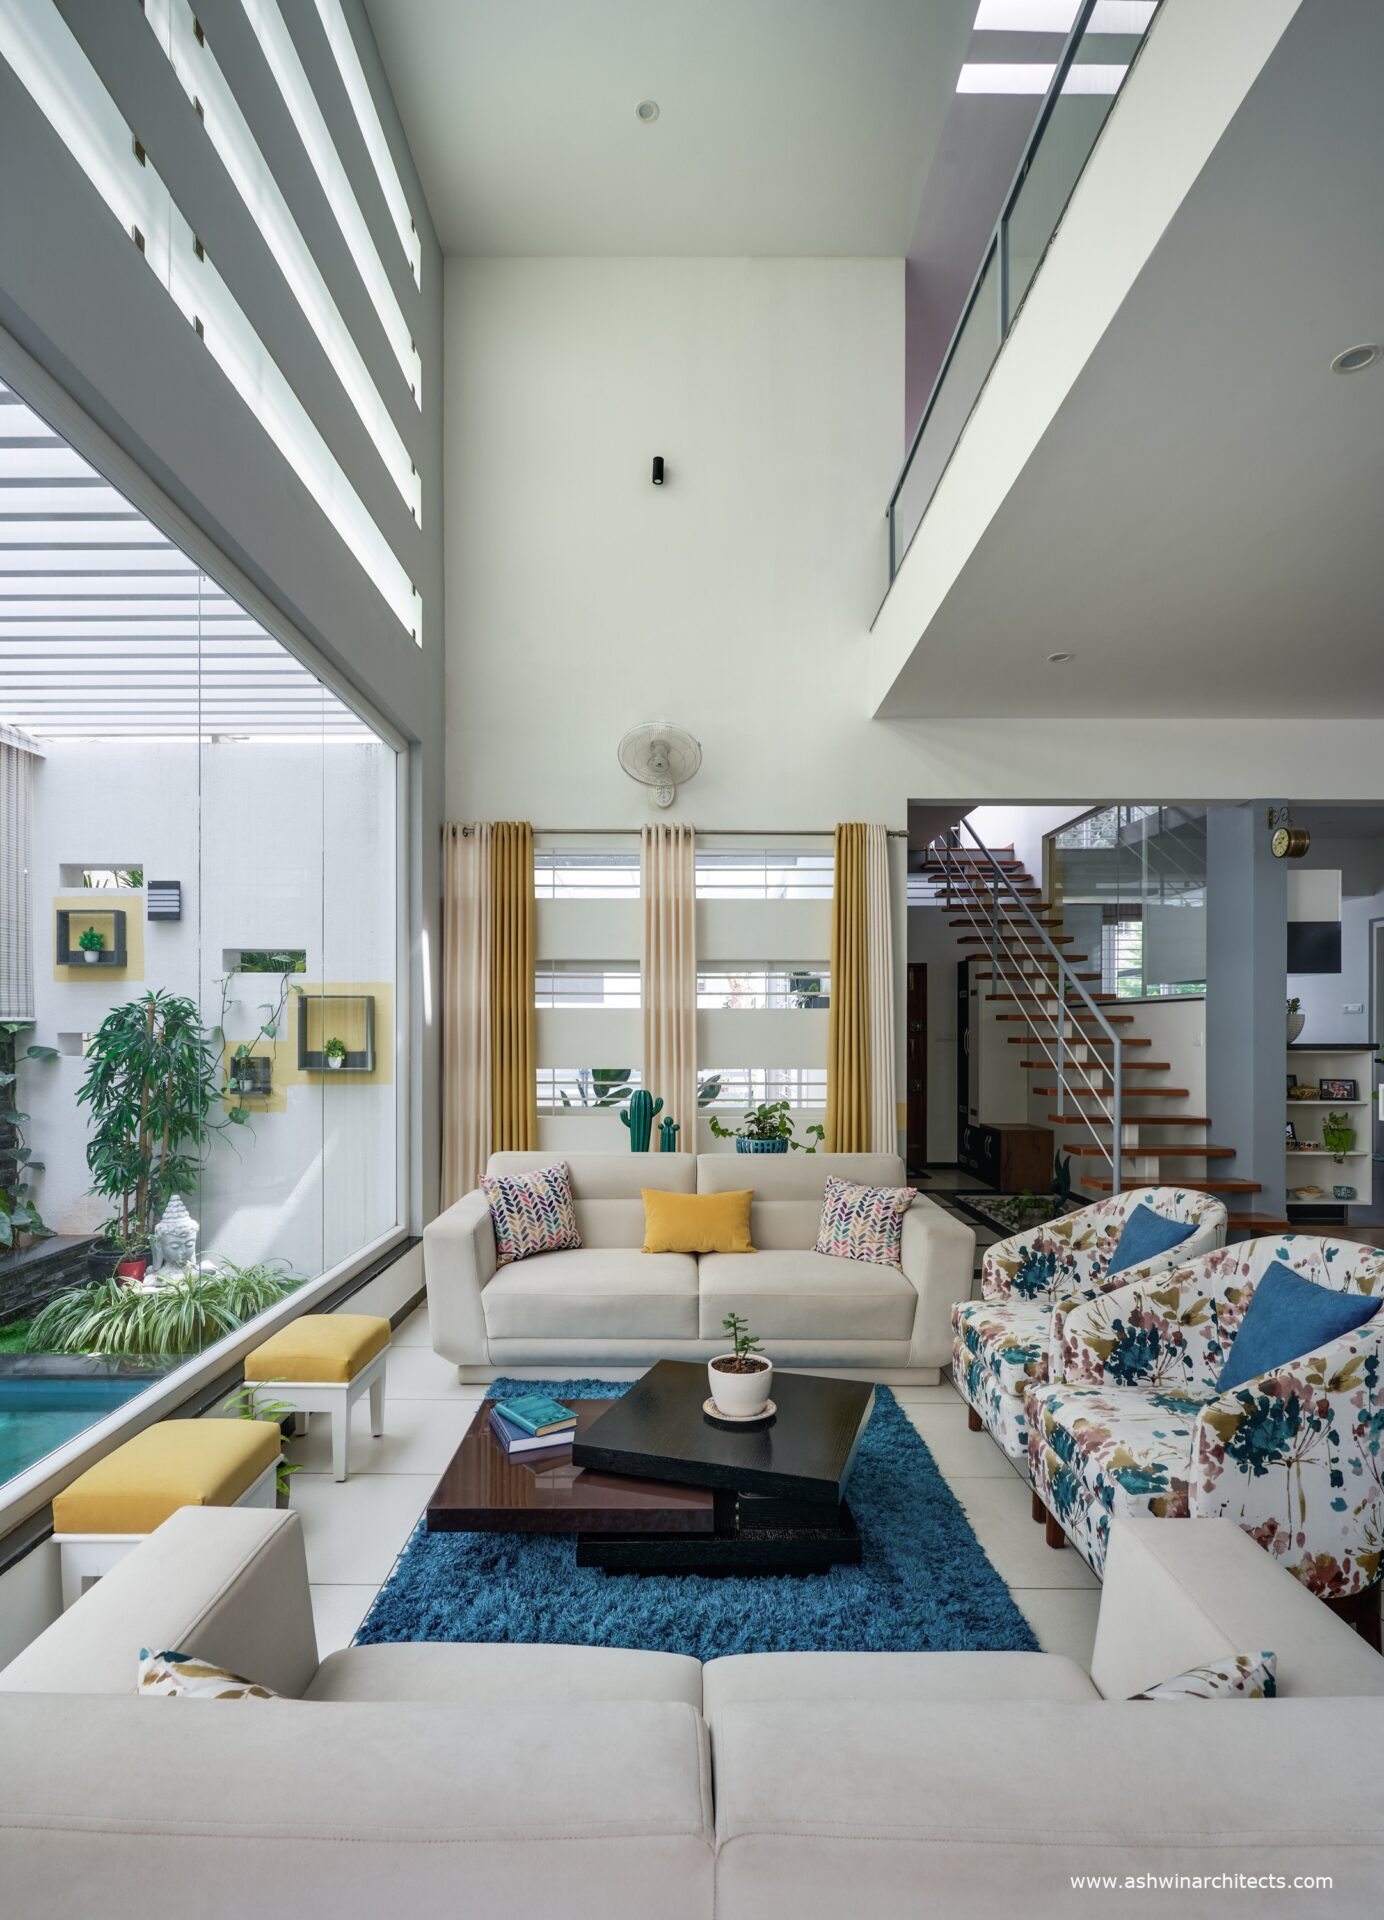 40x60-plot-Living-Room-Interiors-Kailash-Residence-40-x-60-Plot-3BHK-Duplex-Bungalow-3500-sft.-Family-Home-Design